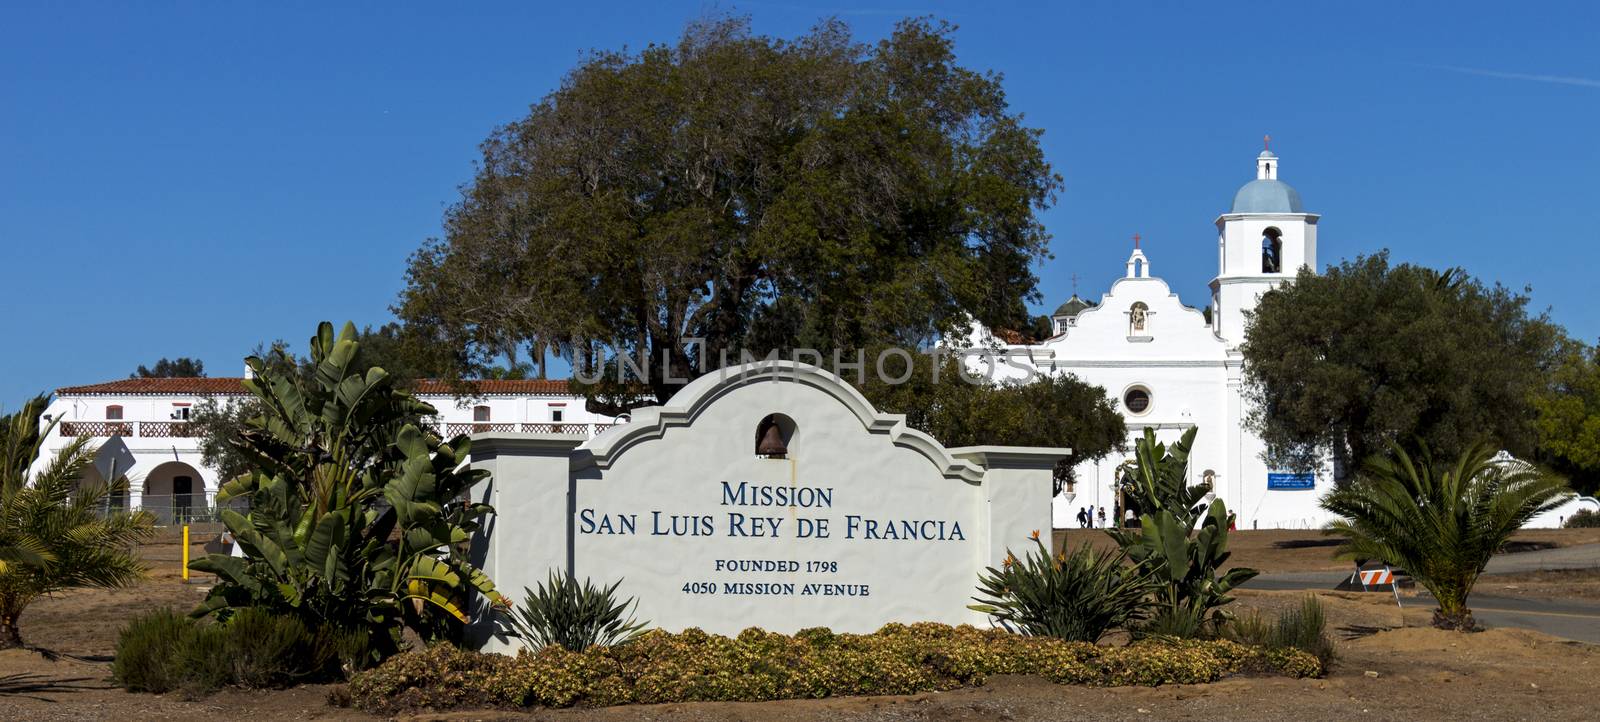 Sign for Mission Basilica San Diego by marlen